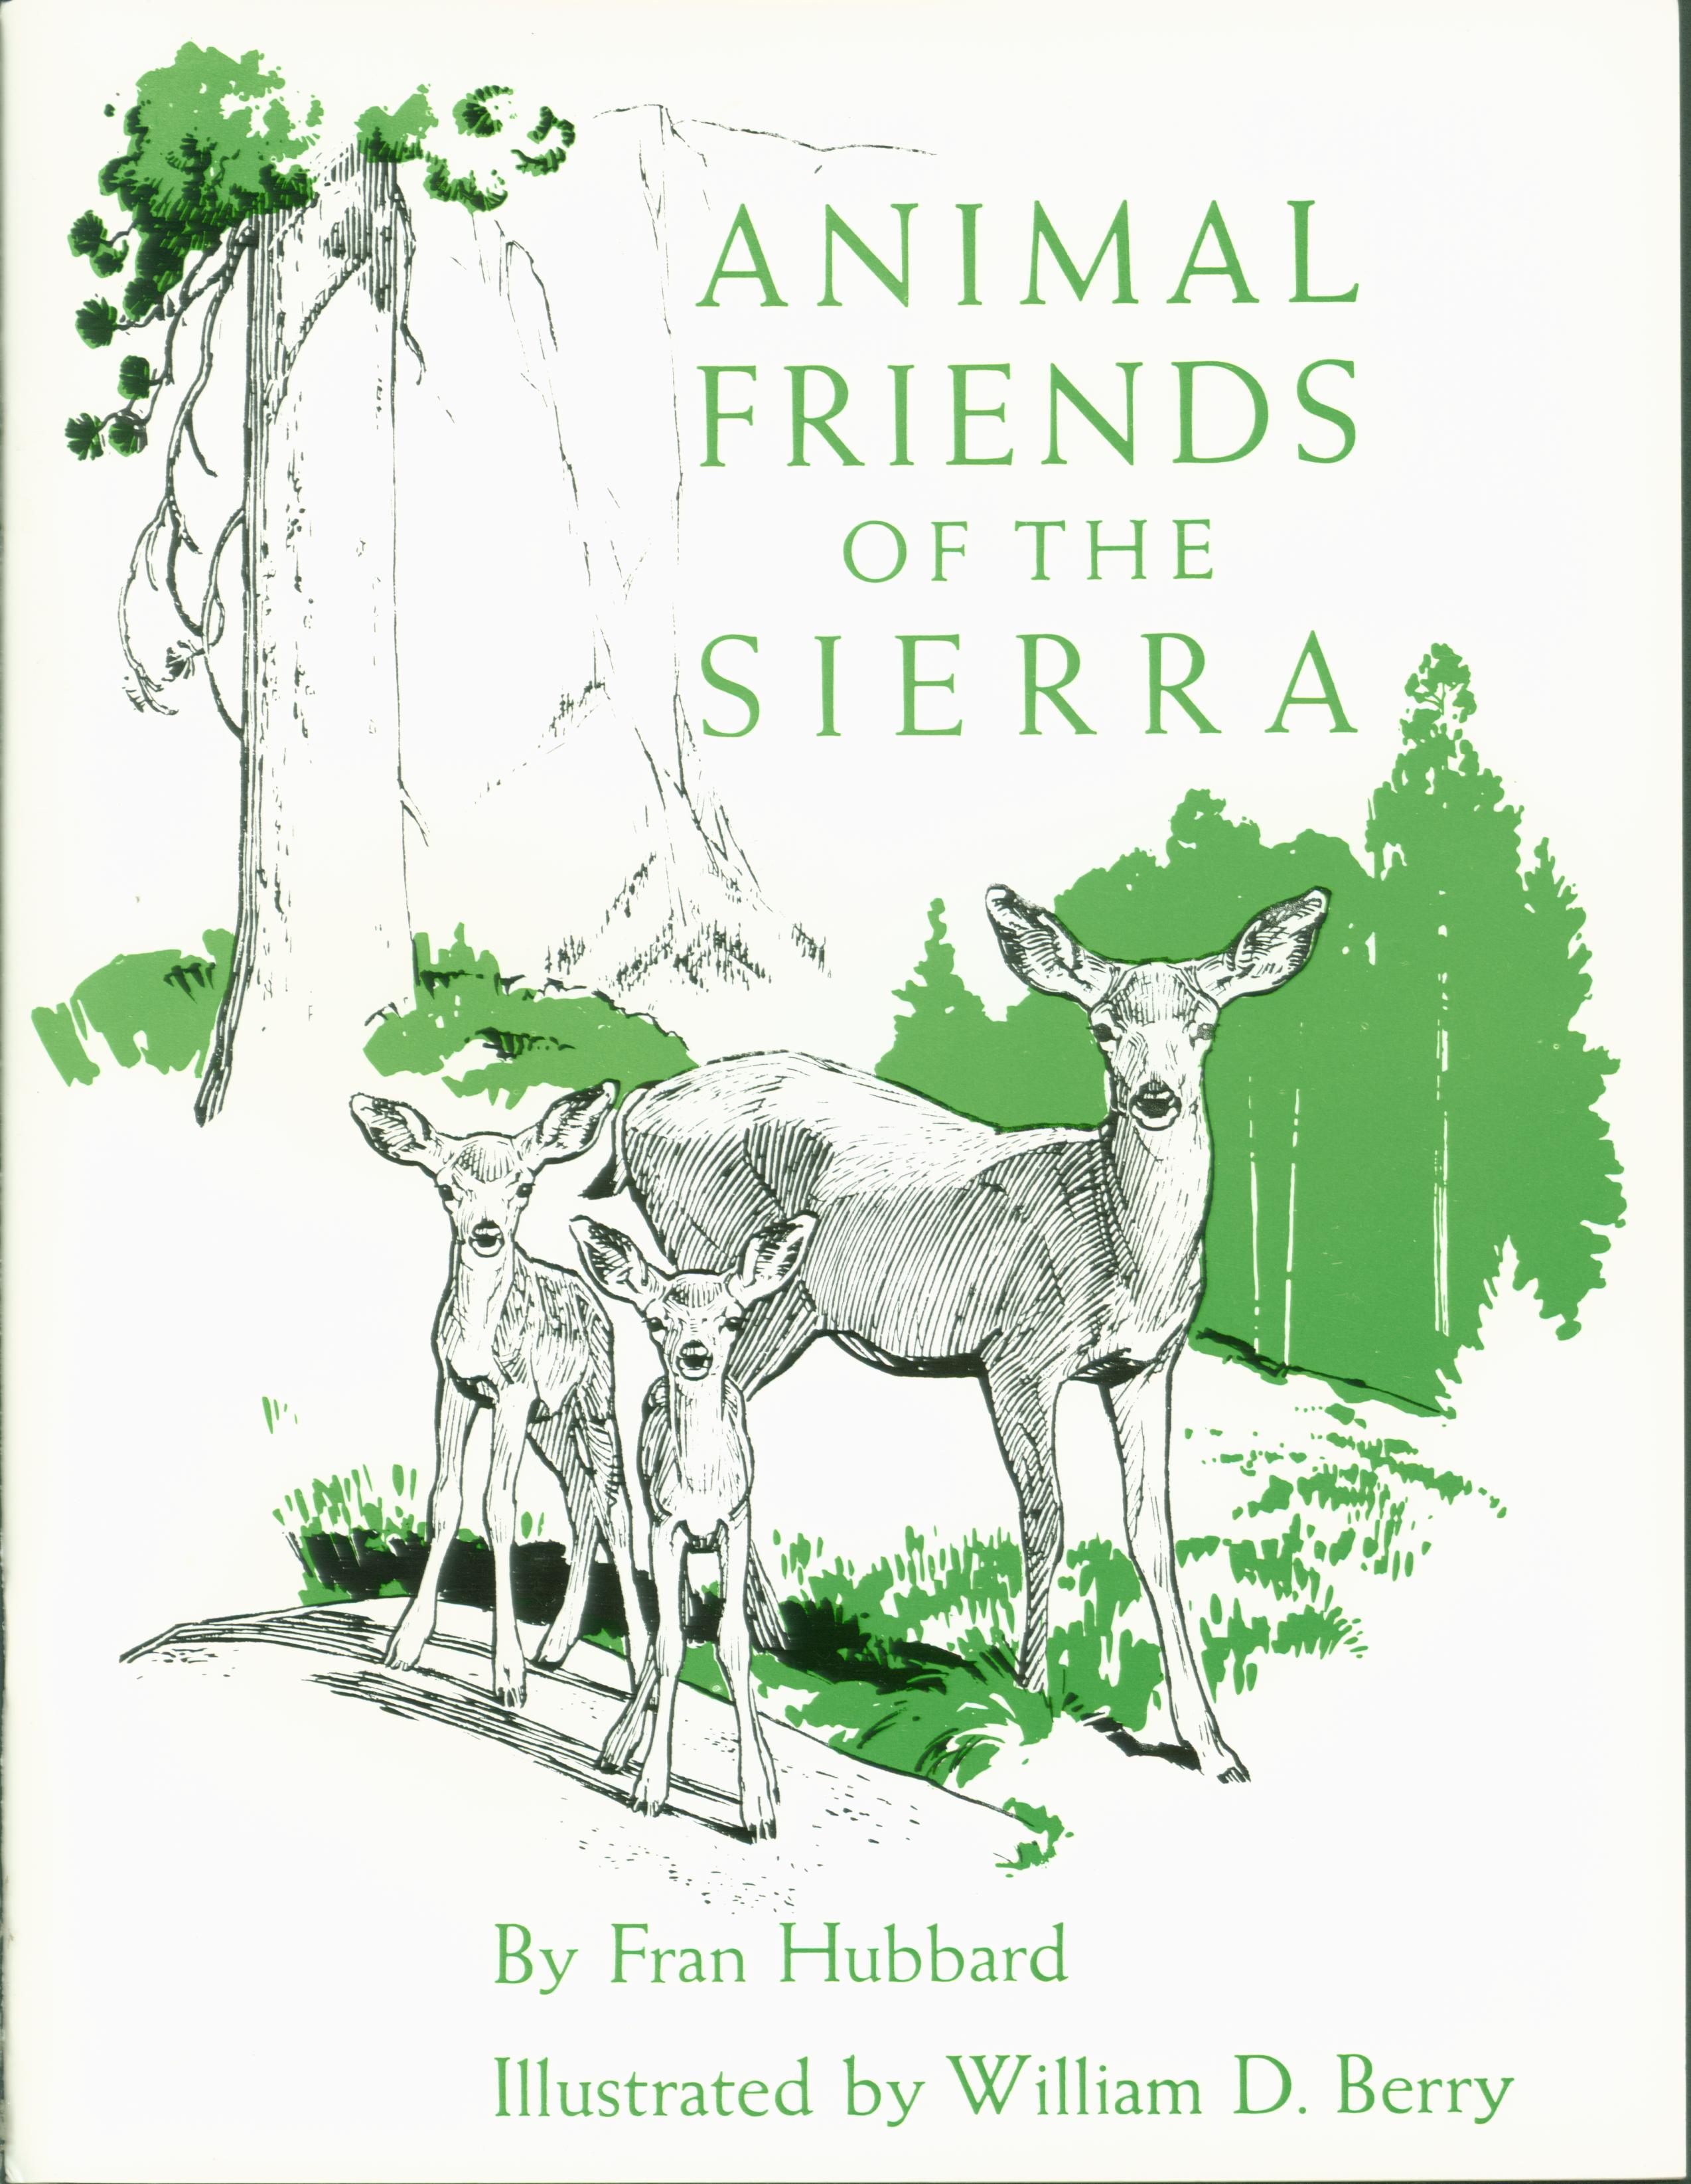 ANIMAL FRIENDS OF THE SIERRA. 